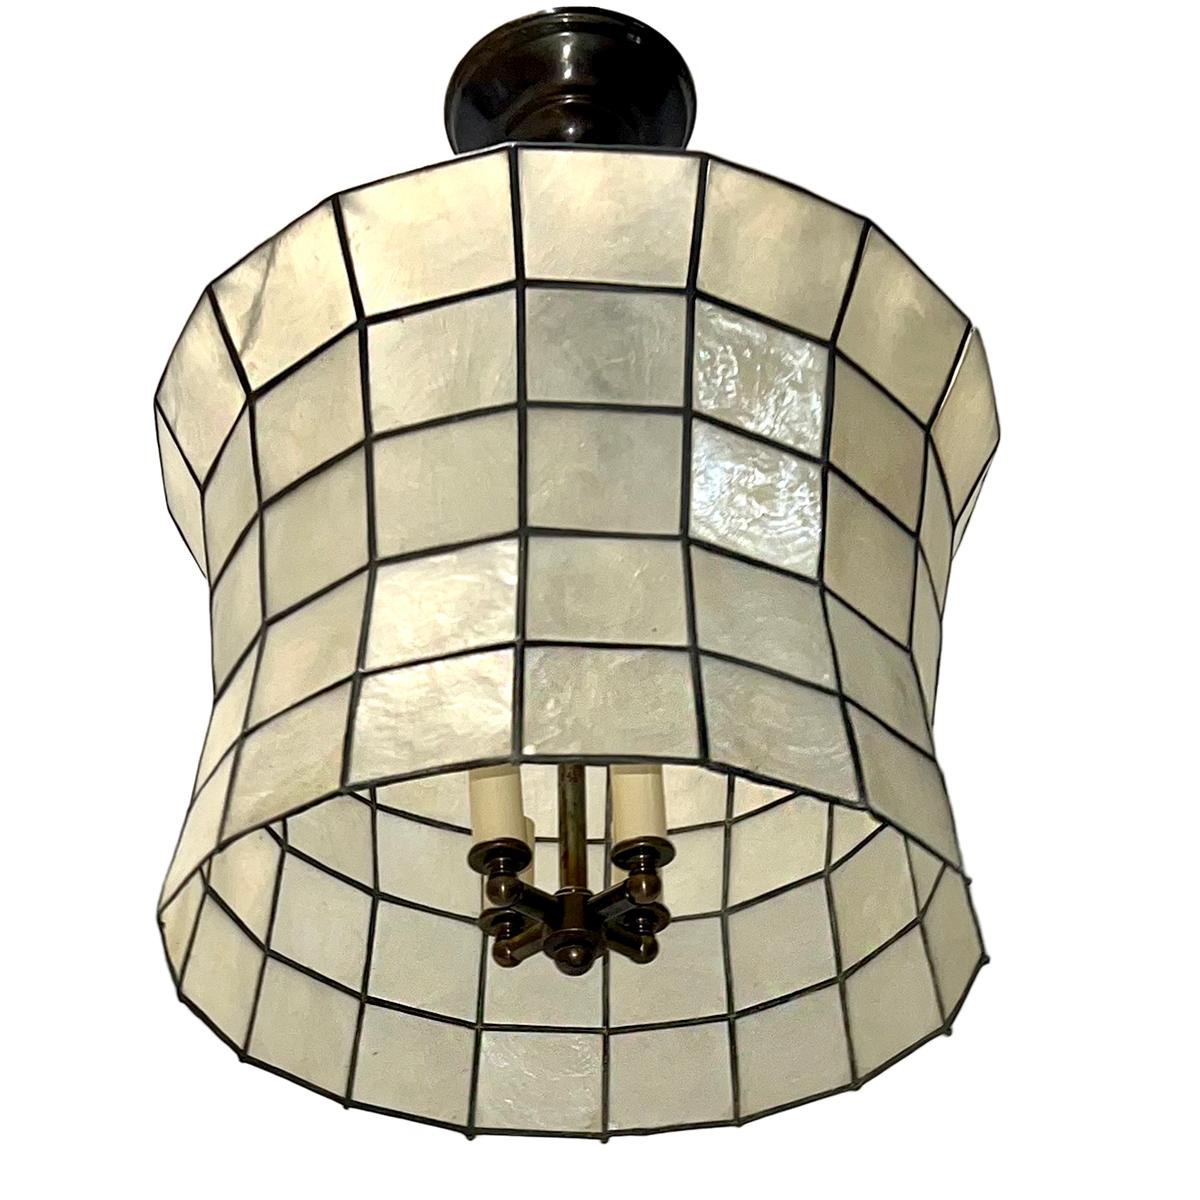 A circa 1960 French capiz lantern with interior lights.

Measurements:
Diameter: 14